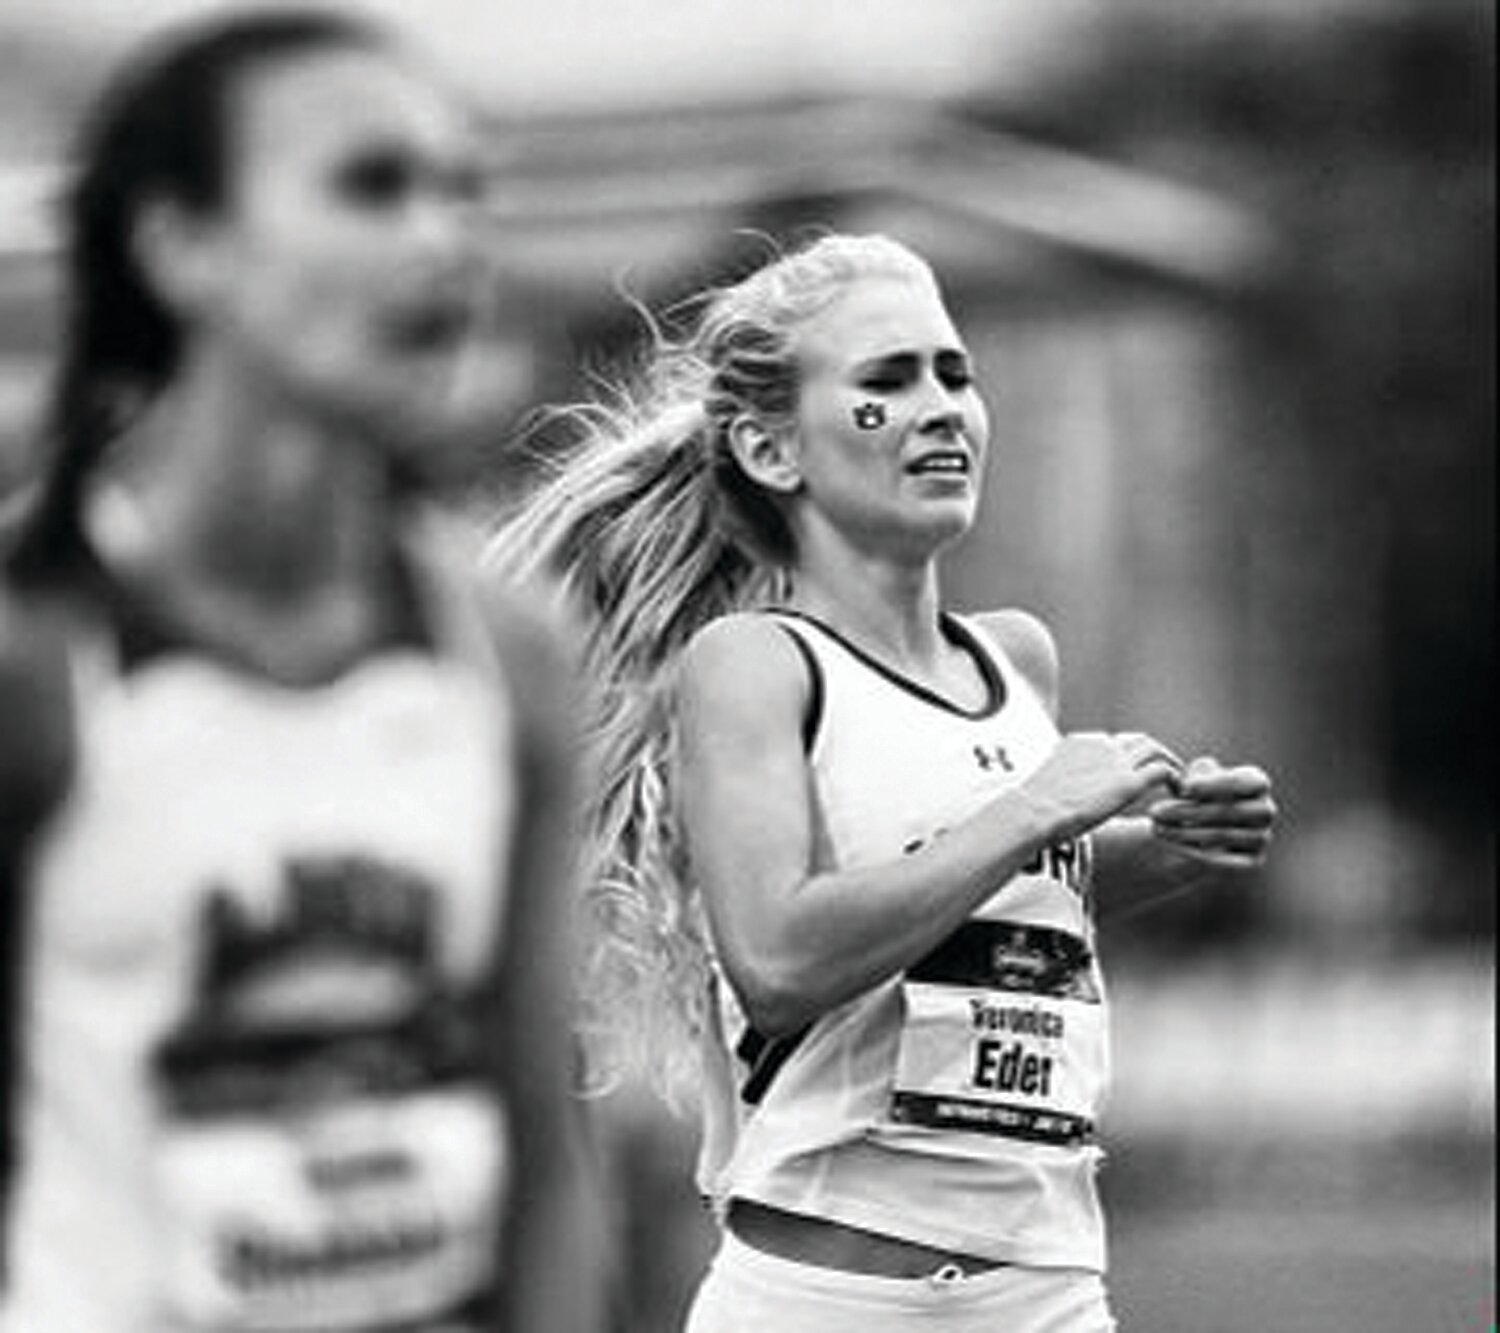 Doylestown native Veronica Eder, competing for Auburn University, runs her final college race, the NCAA 5K championship.